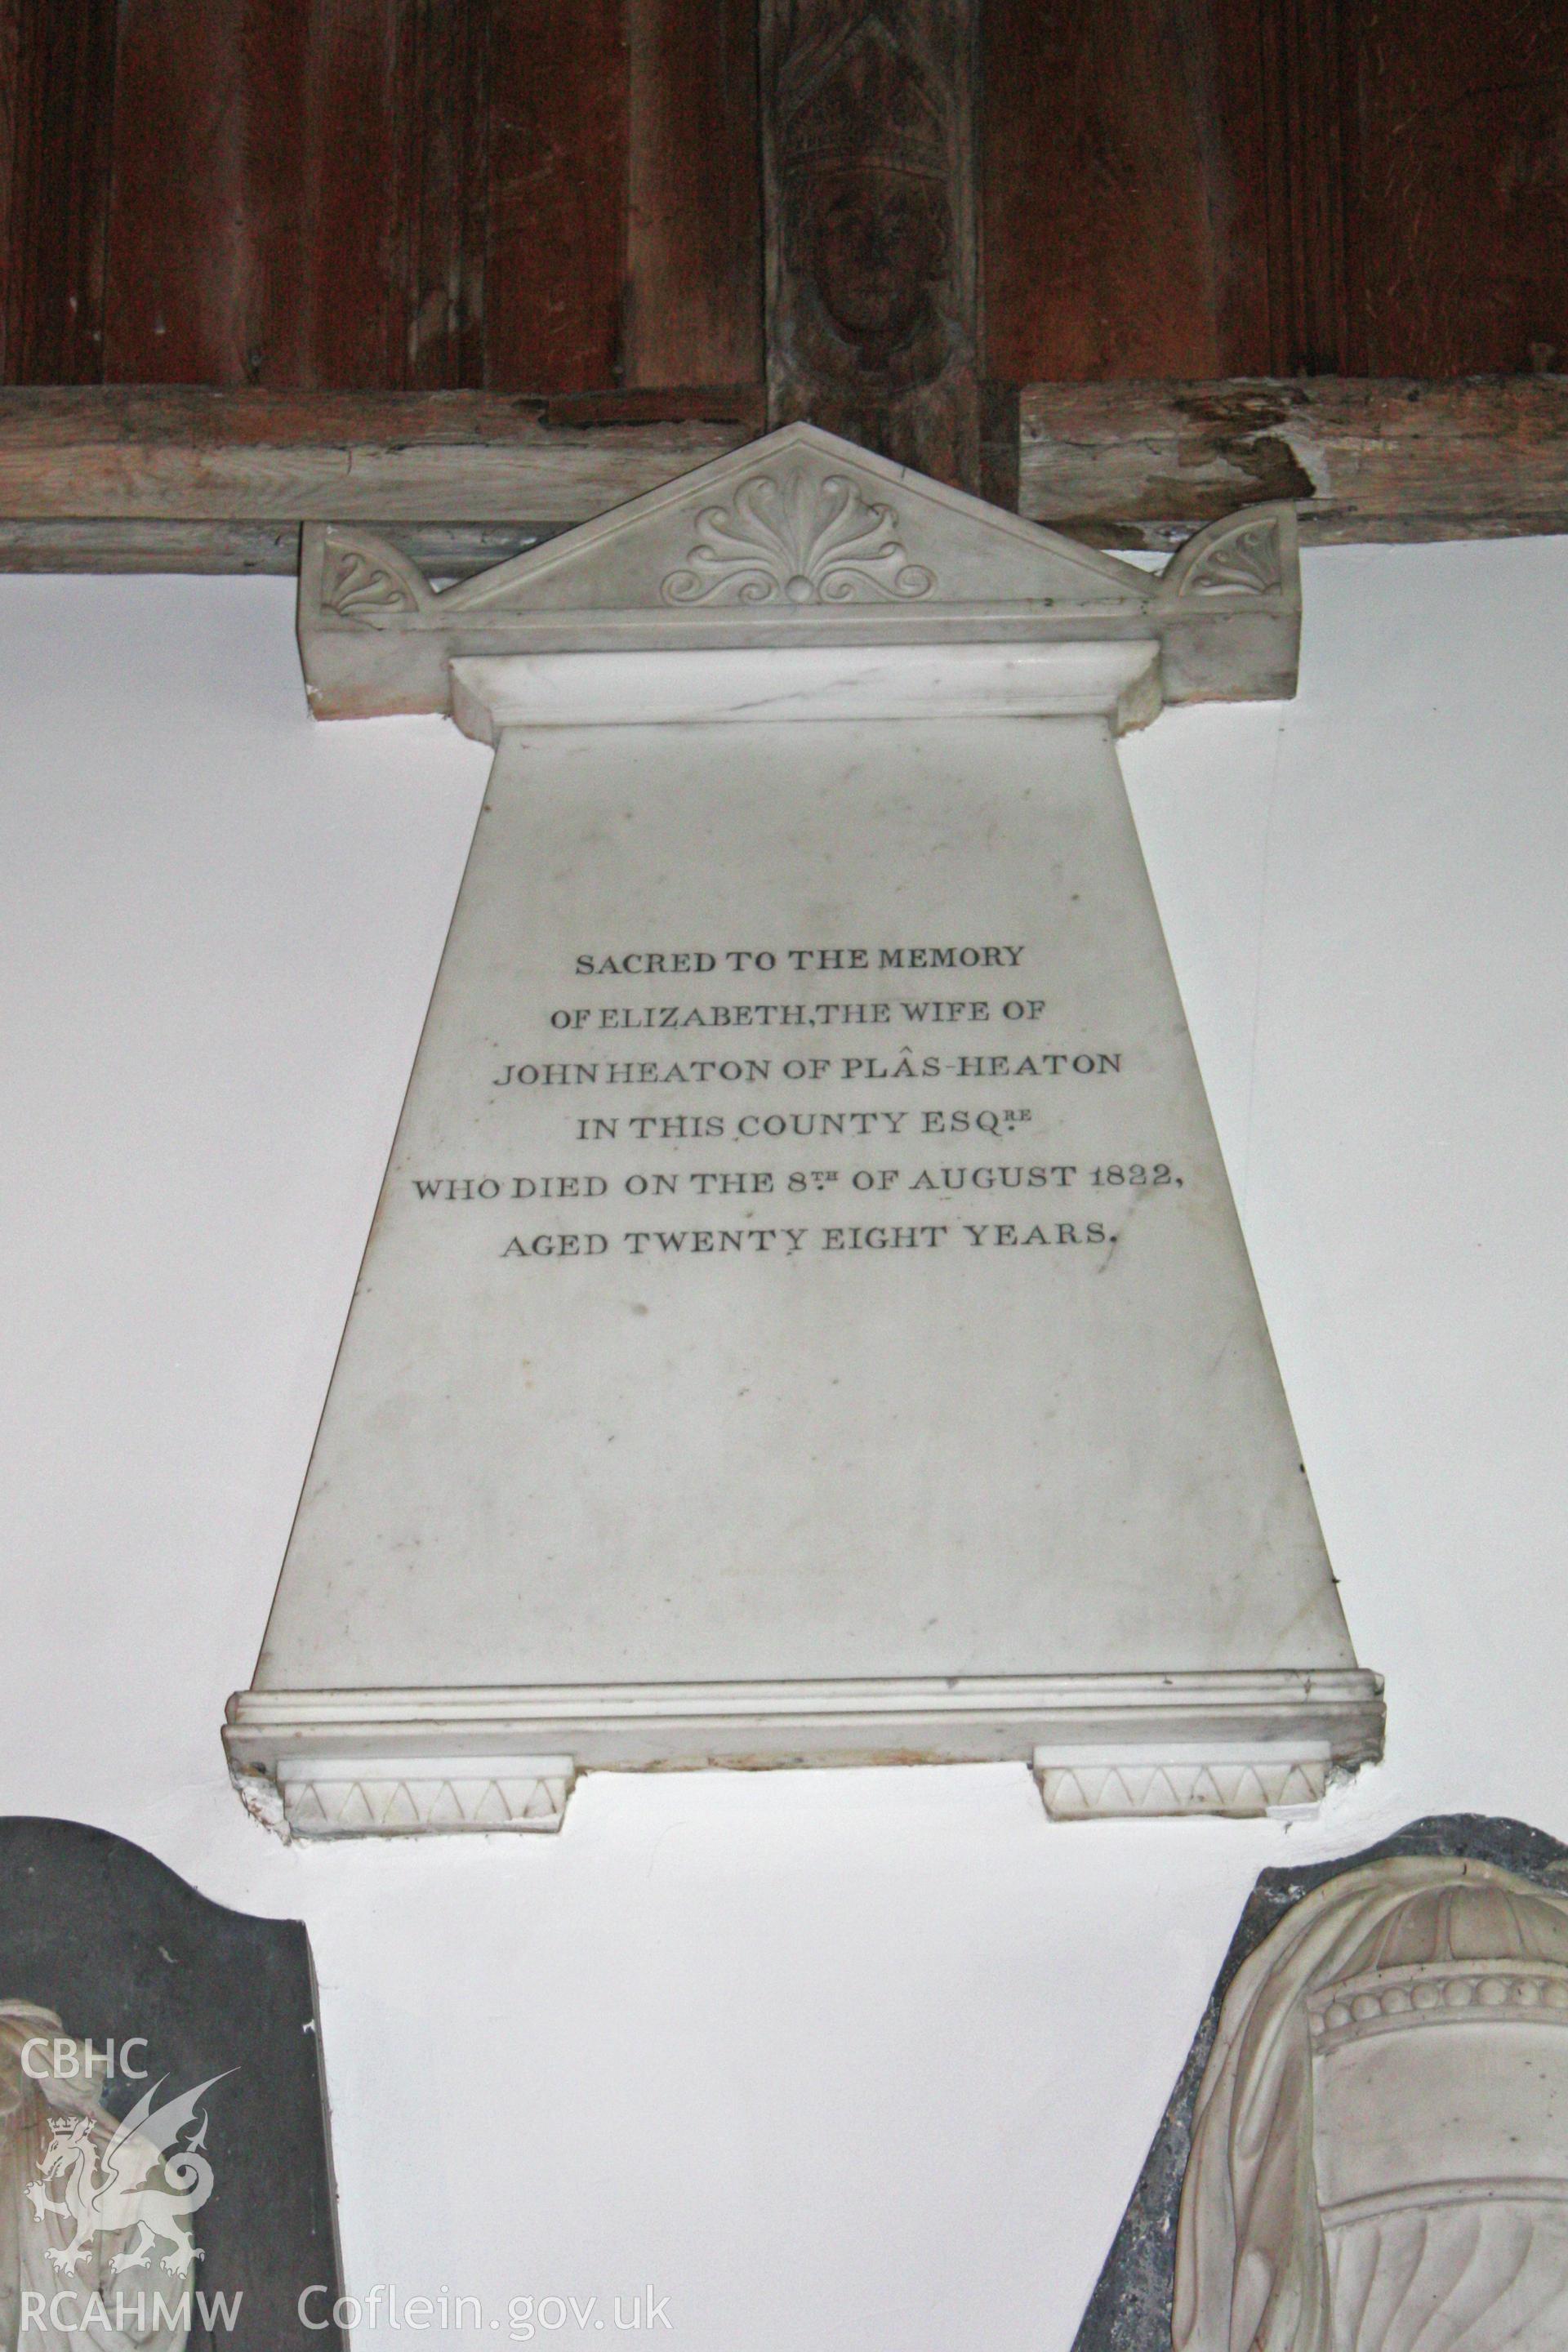 St Marcella's Church detail of interior memorial stone